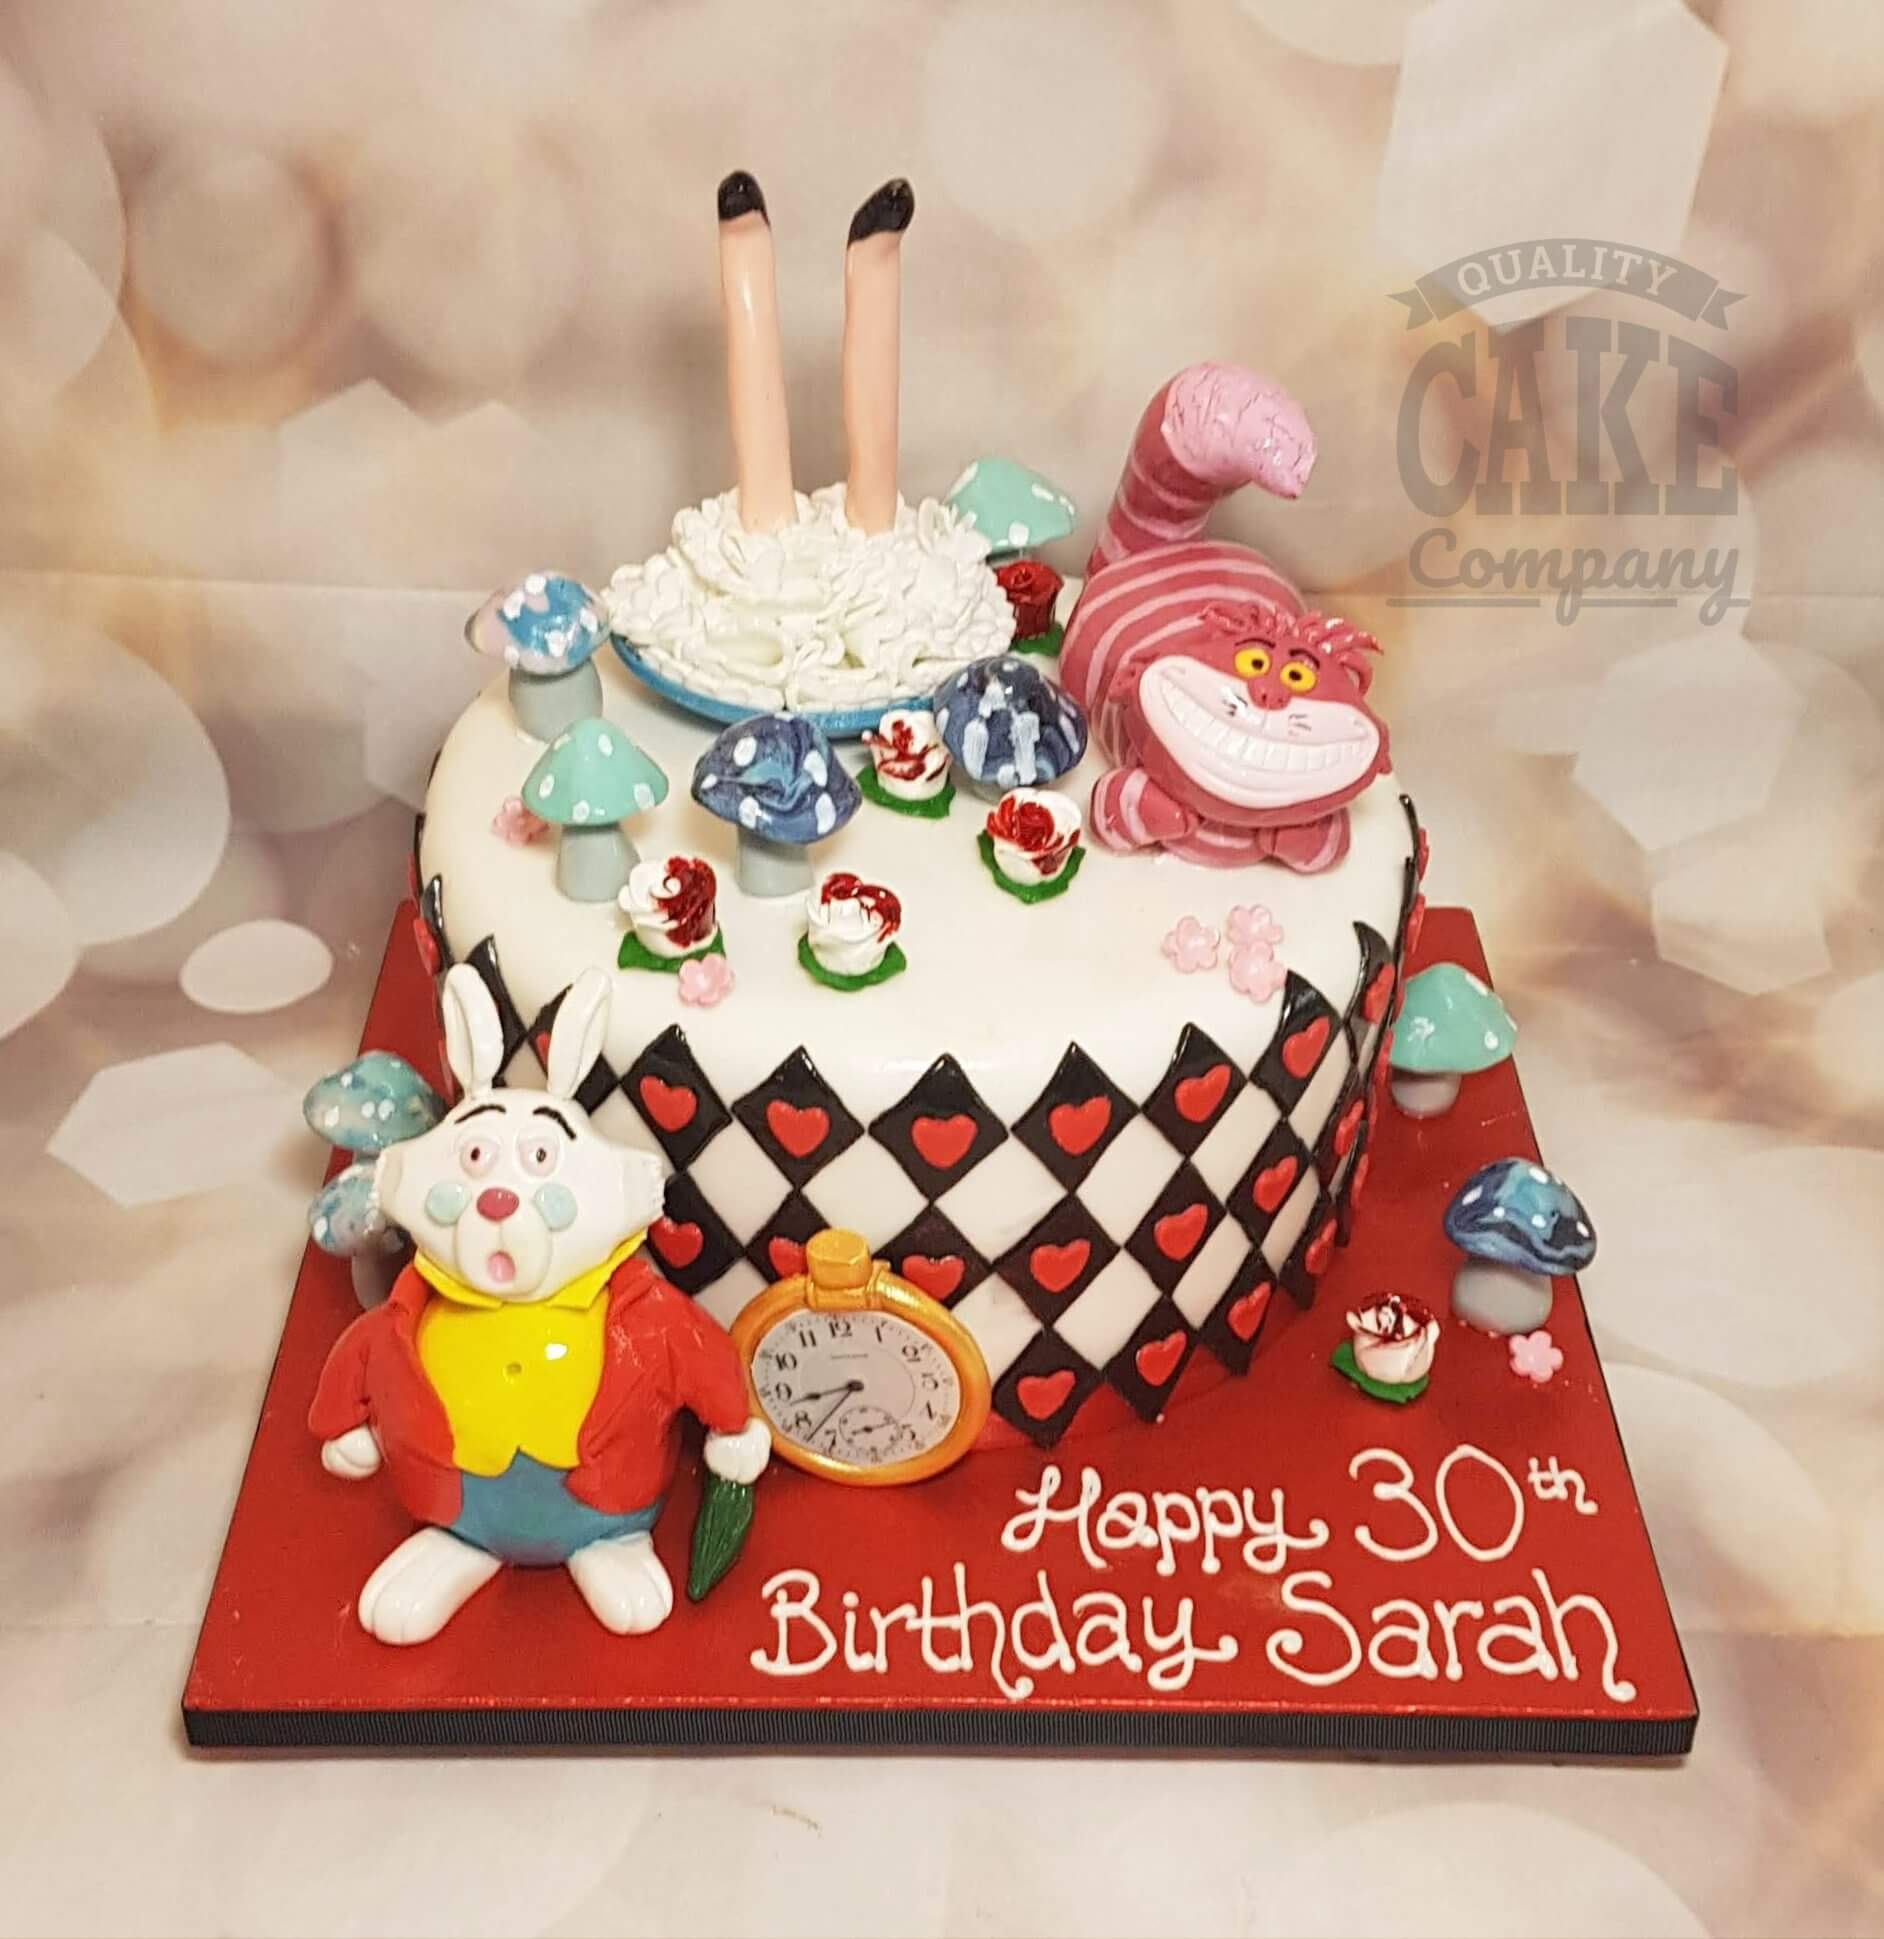 Alice in Wonderland Theme Cakes - Quality Cake Company